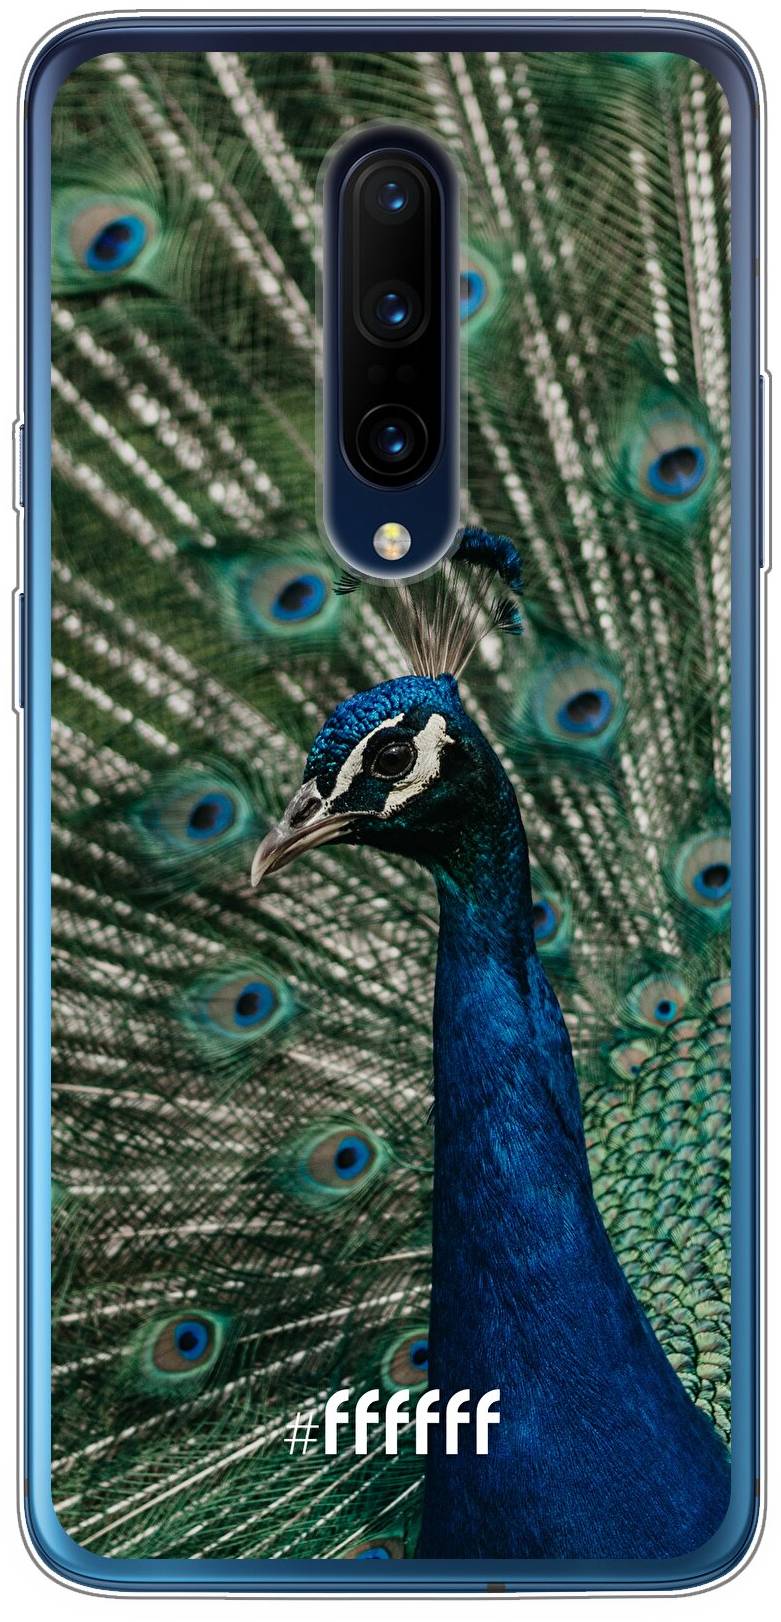 Peacock 7 Pro